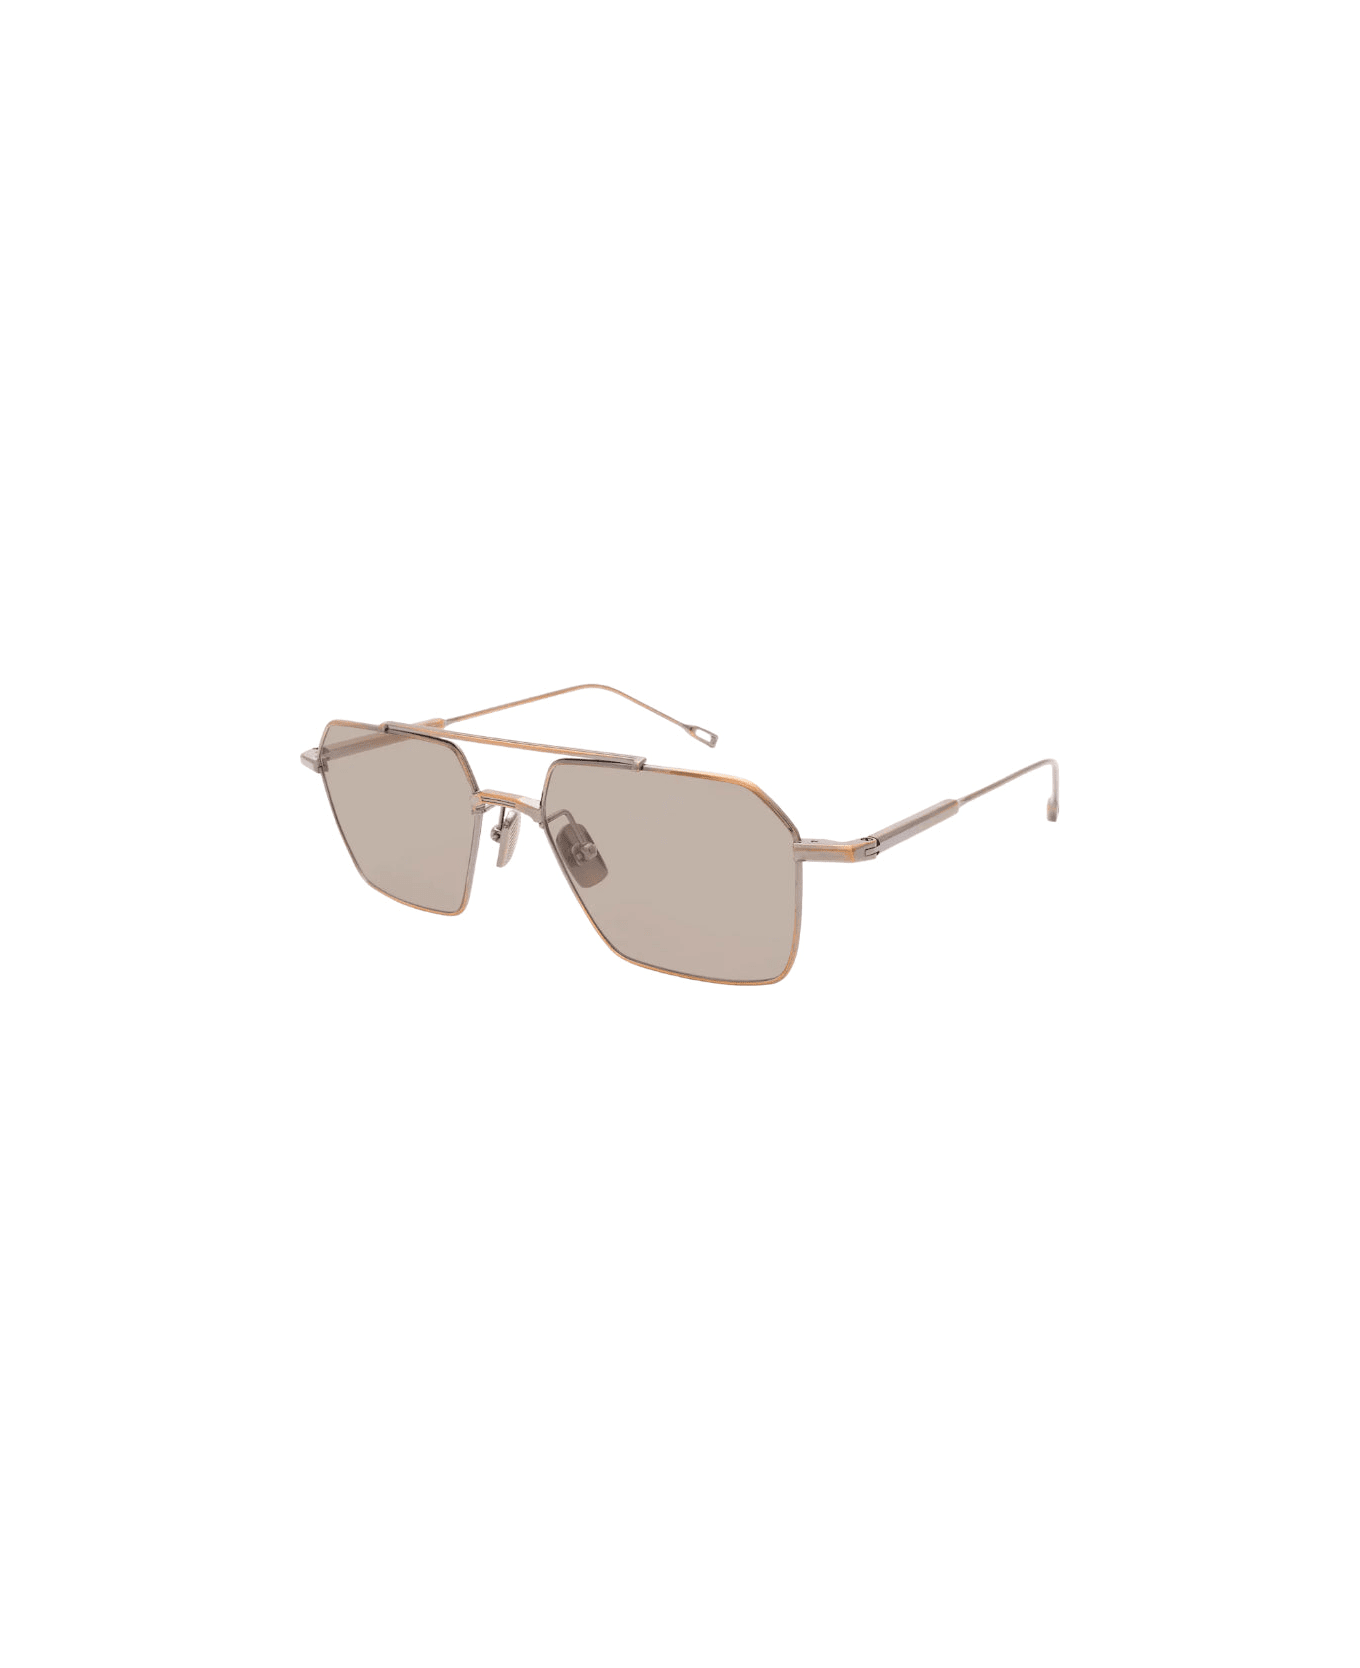 Native Sons Remm - Antique Gold - 52 Sunglasses サングラス